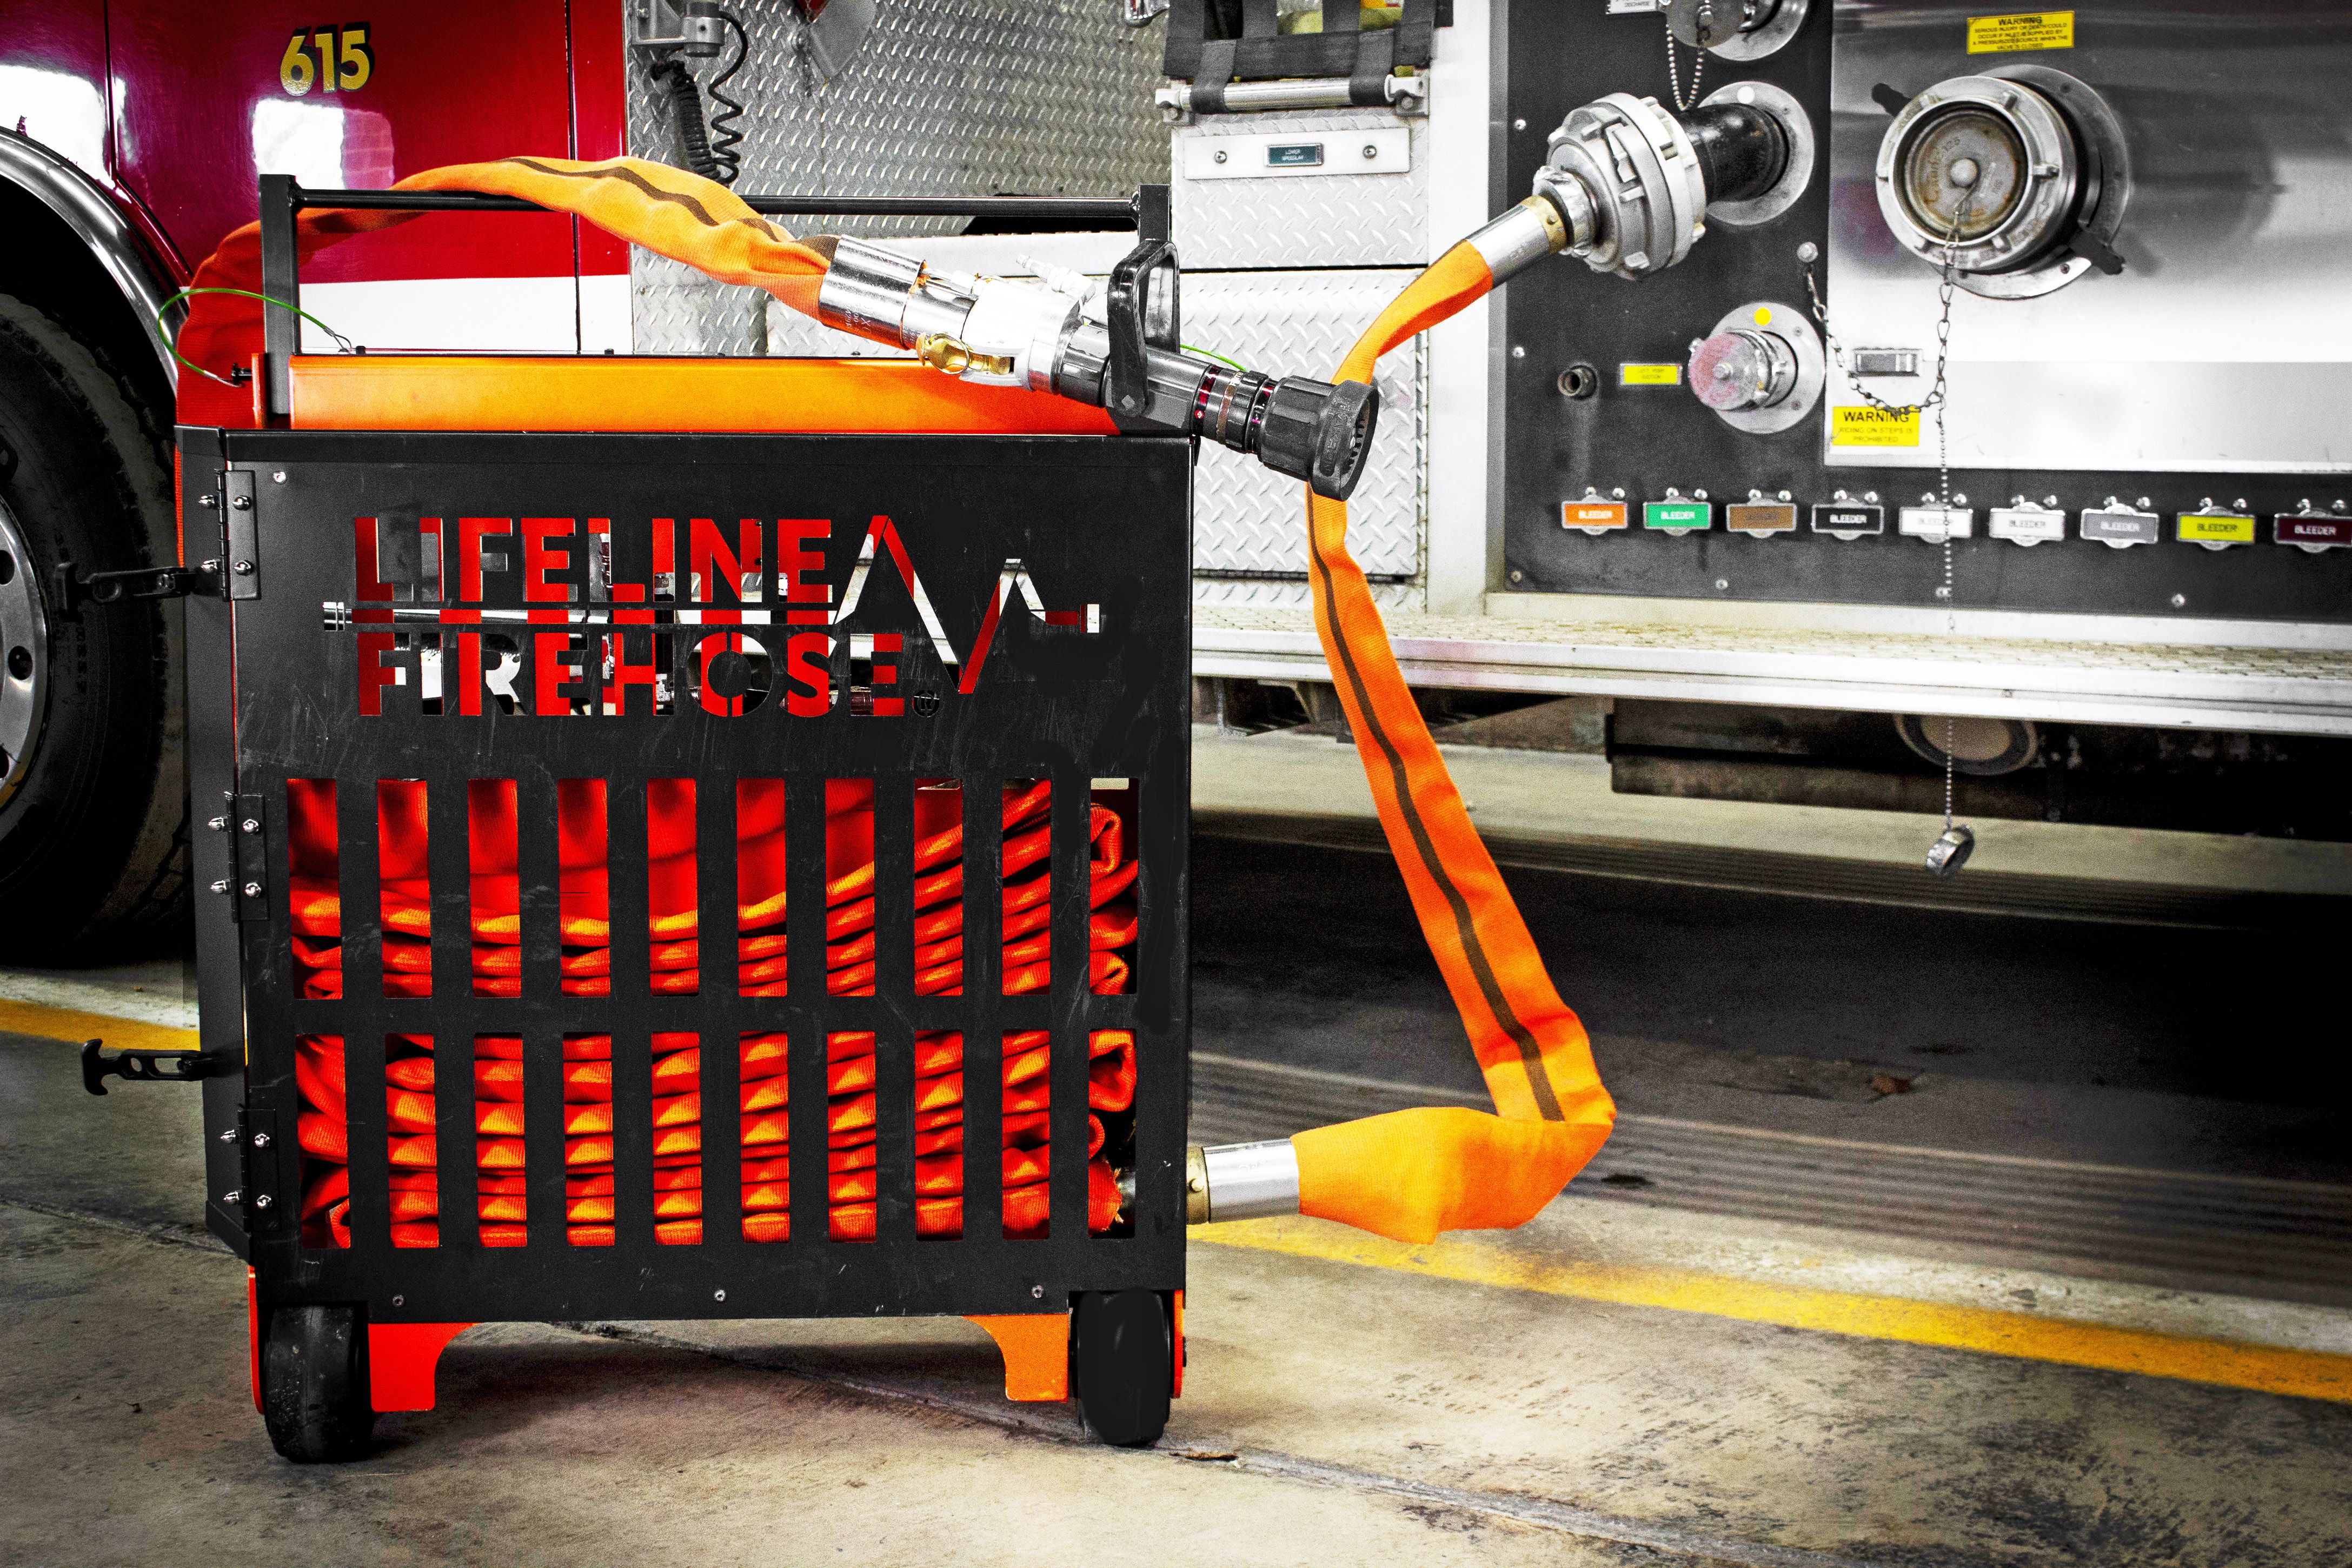 Lifeline Firehose  New Hose for Firefighters